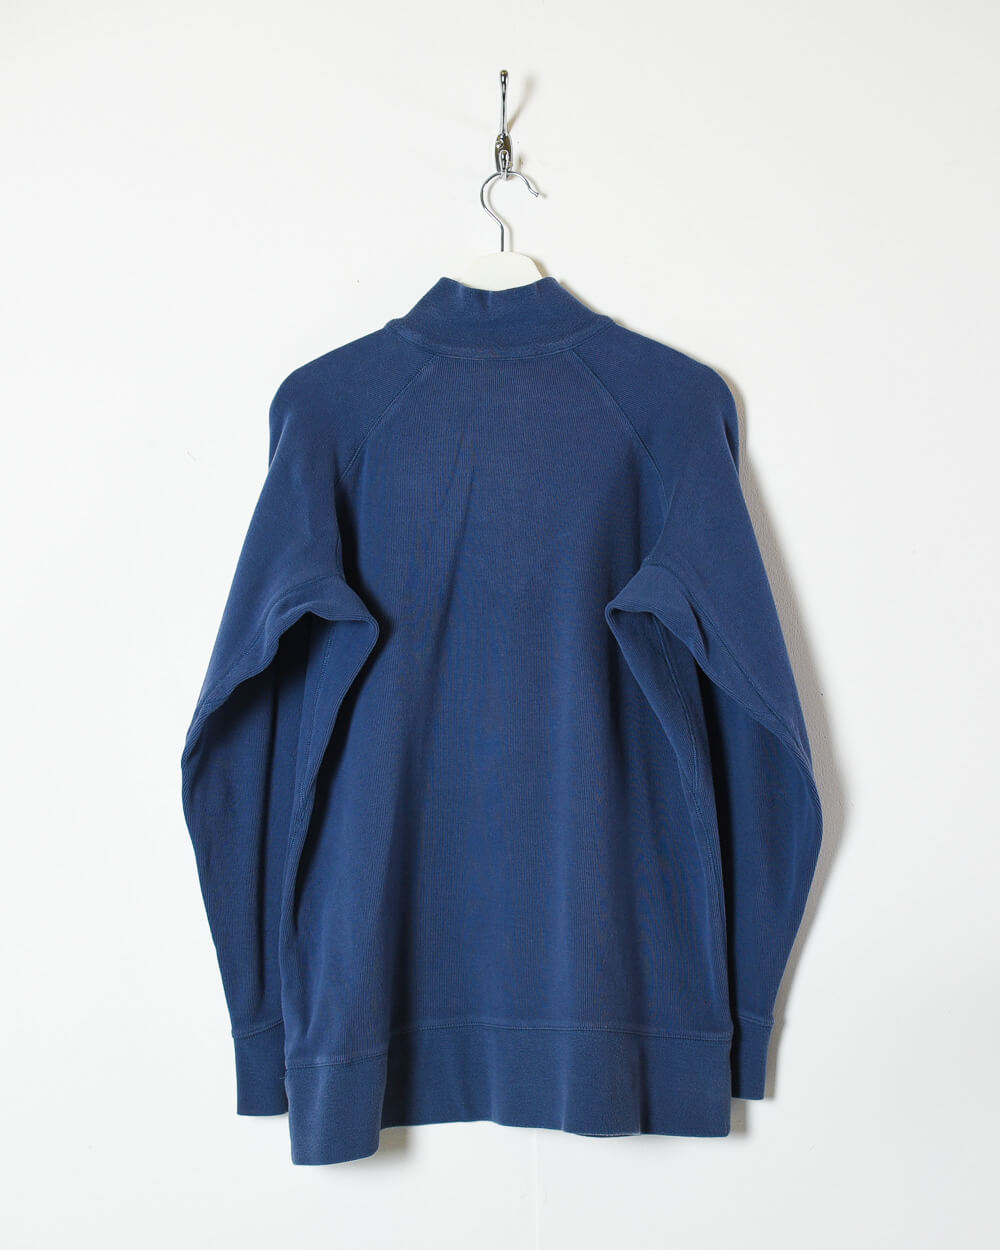 Blue Nike 1/4 Zip Sweatshirt - Large